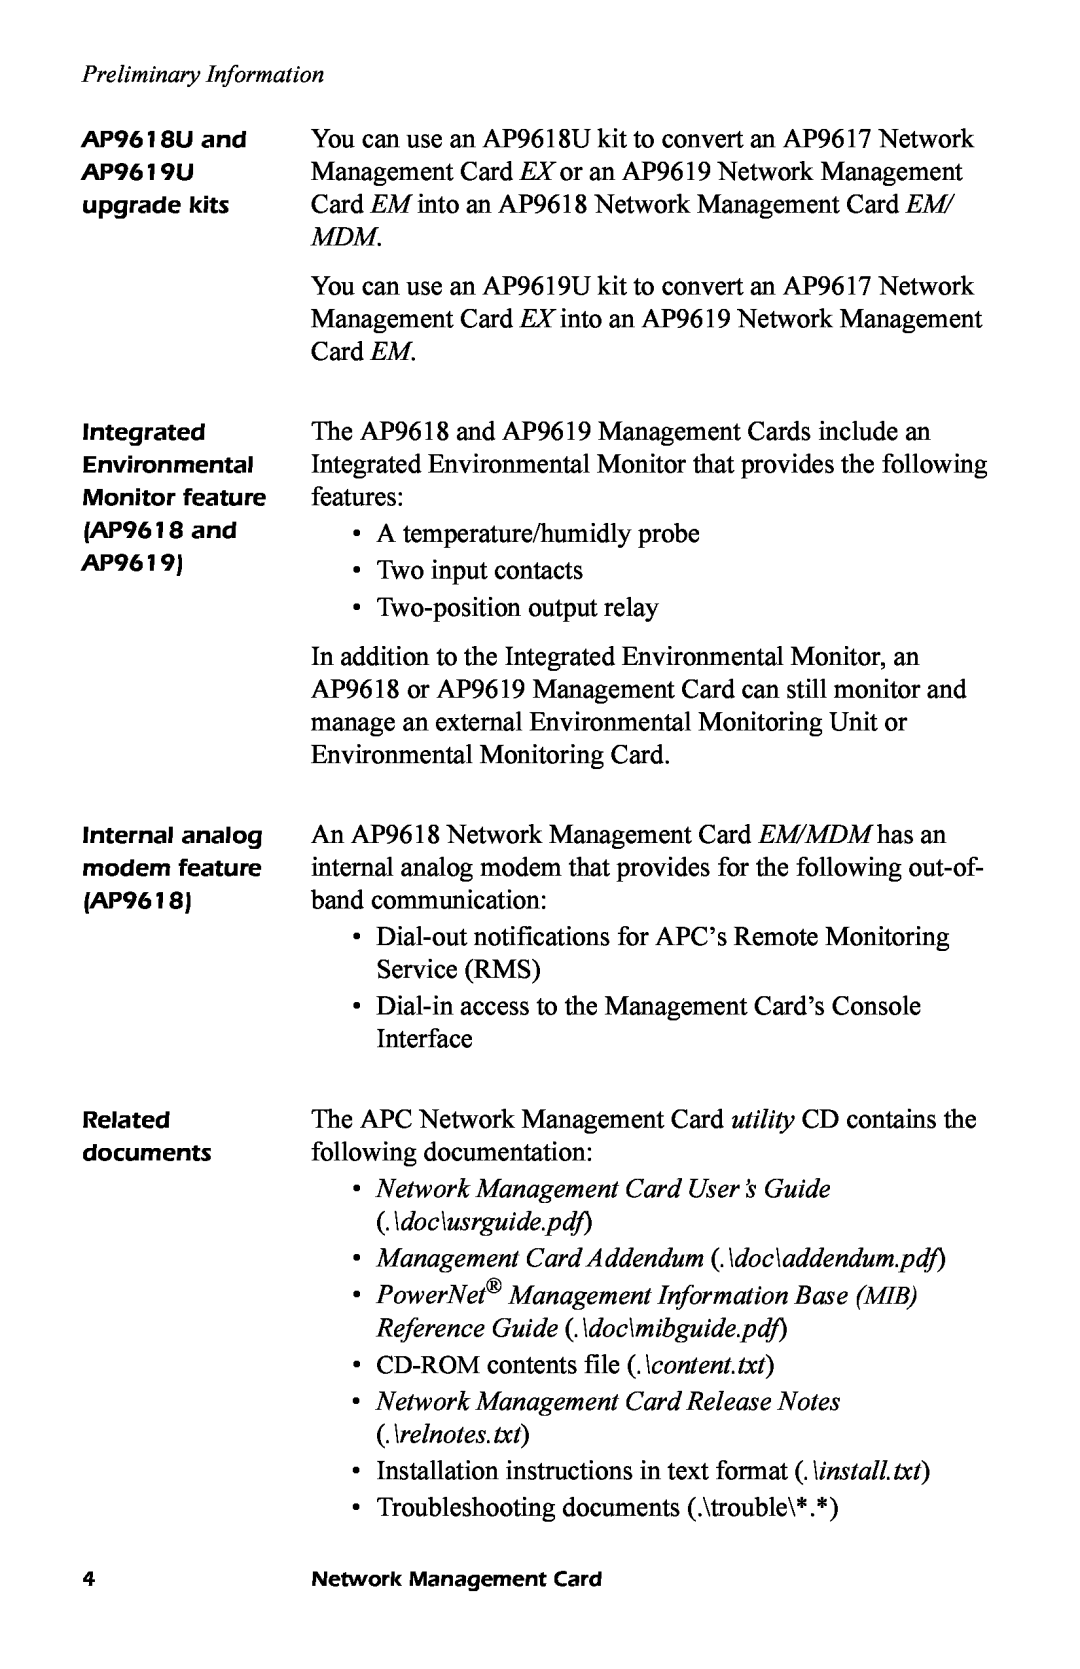 APC AP9619, AP9618 Network Management Card User’s Guide, doc\usrguide.pdf, Management Card Addendum .\doc\addendum.pdf 